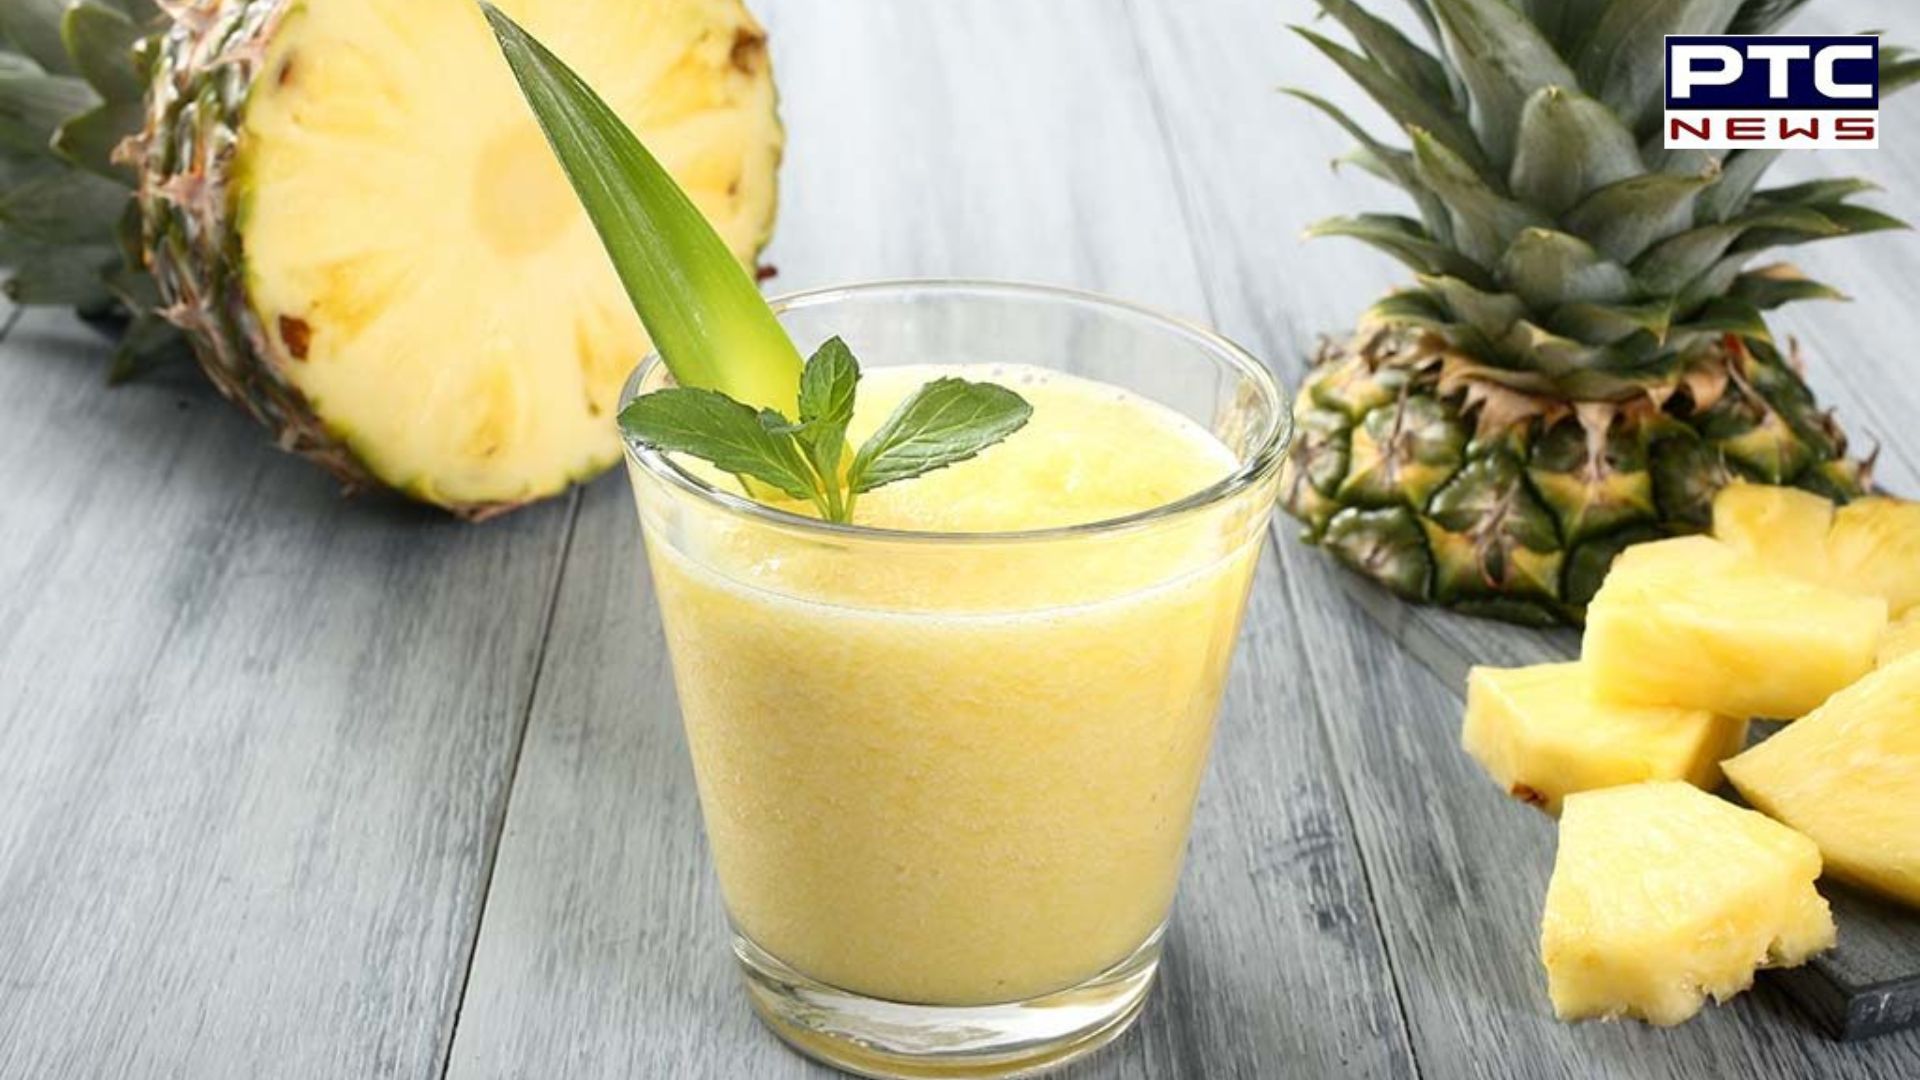 Pineapple Lassi Benefits: ਸੁਆਦ ਨਾਲ ਸਿਹਤ ਸਮਸਿਆਵਾਂ ਨੂੰ ਦੂਰ ਕਰਨ 'ਚ ਹੈ ਲਾਹੇਵੰਦ ਅਨਾਨਾਸ ਦੀ ਲੱਸੀ